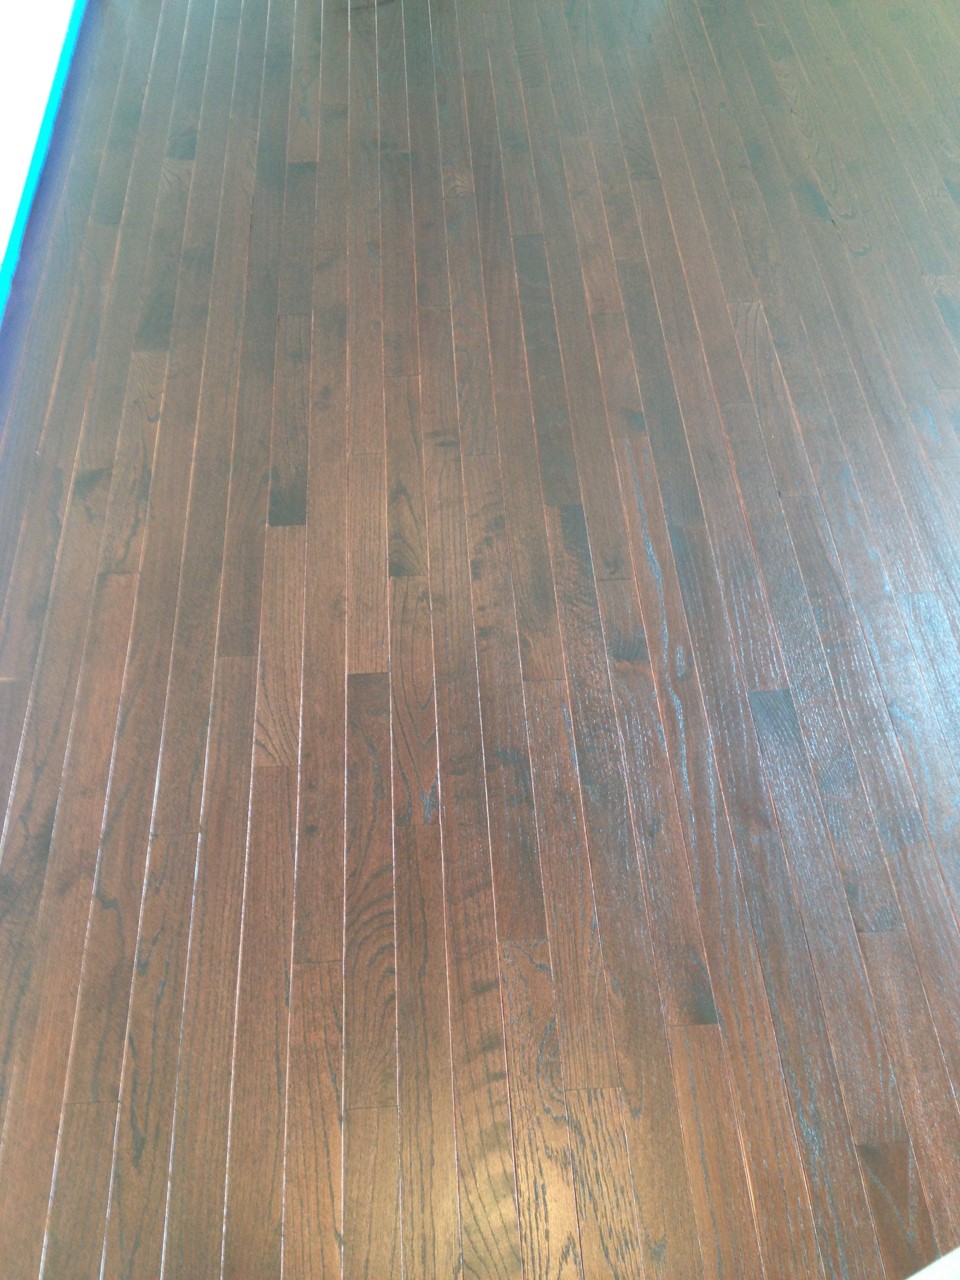 Unfinished Hardwood Flooring, Prefinished Vs Unfinished Hardwood Floors